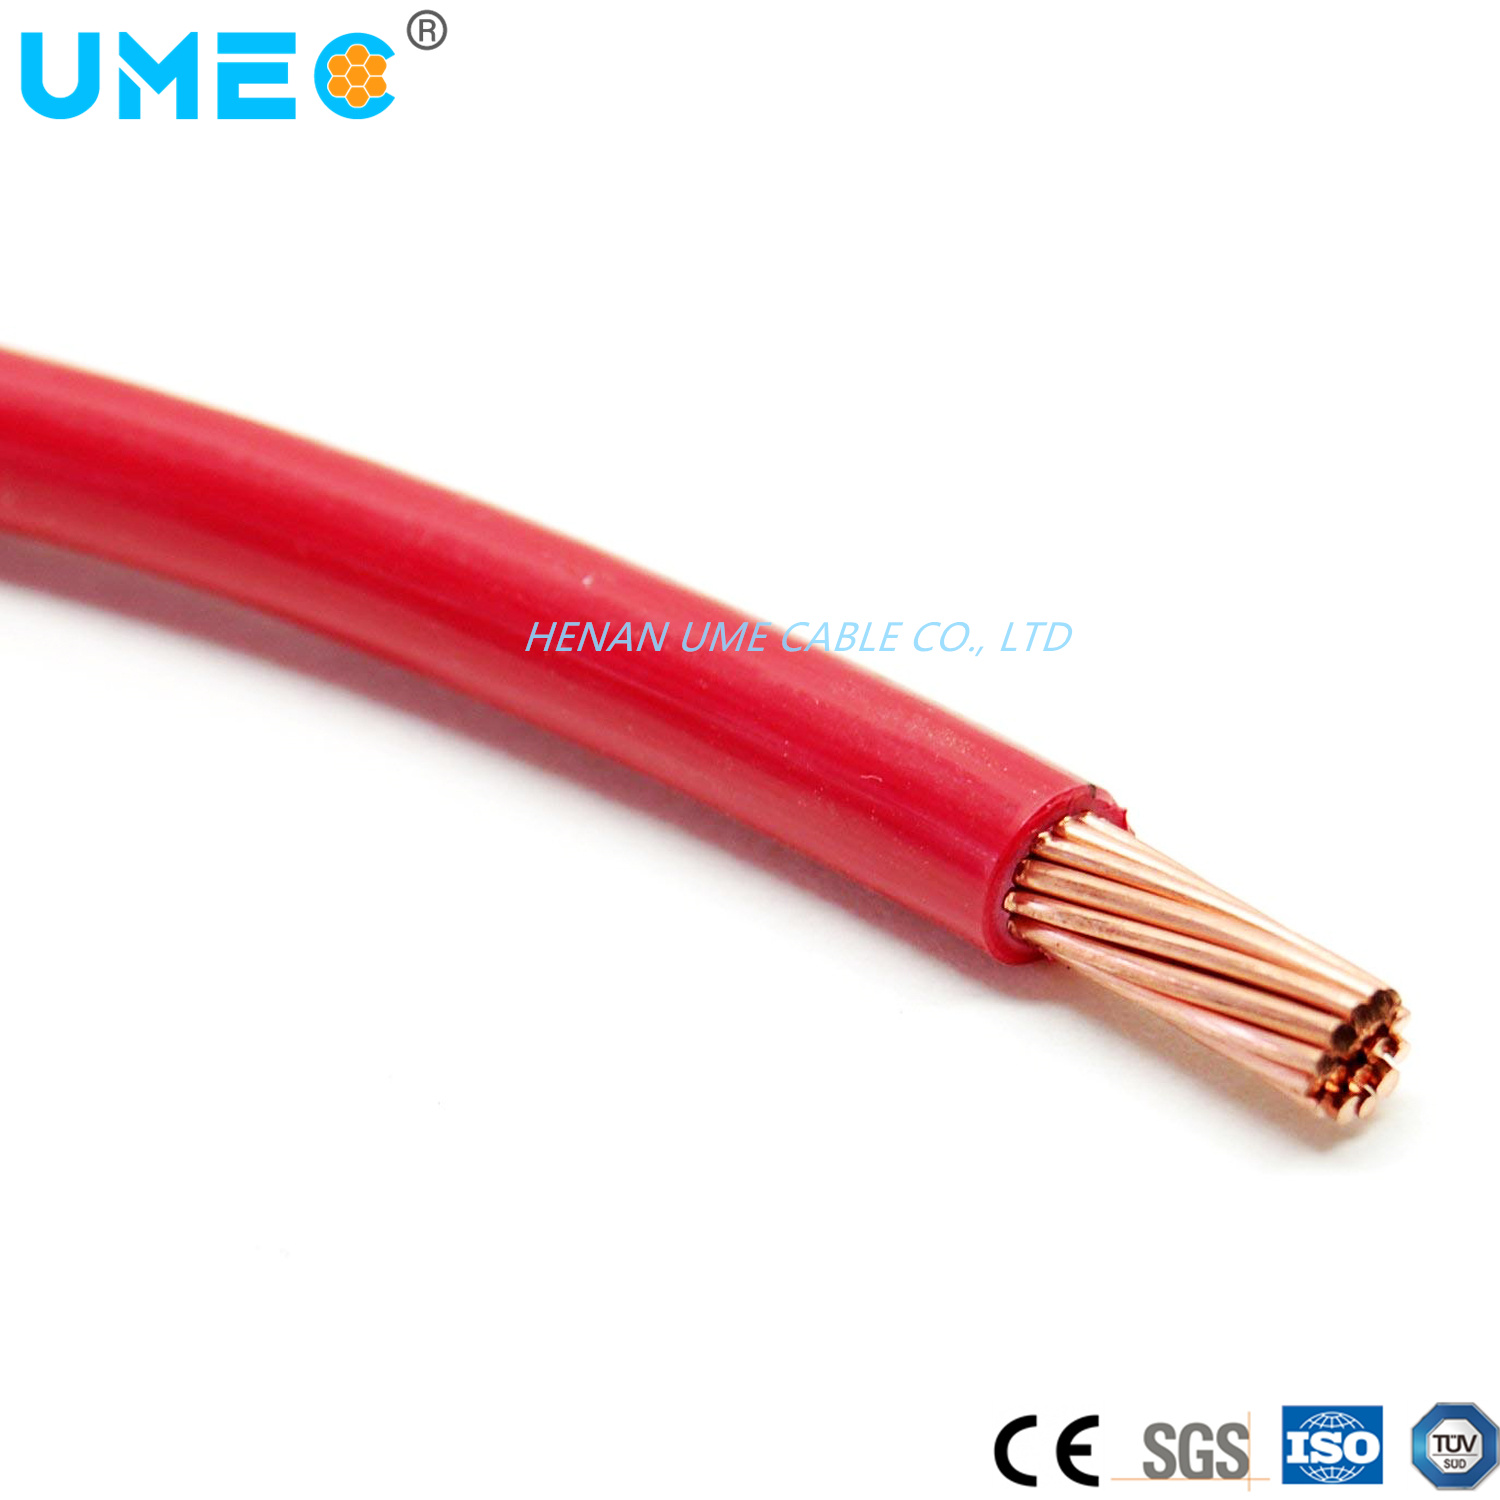 
                Cable flexible de nylon Thwn de baja tensión 600V 12/16/18gauge multifilar Cable eléctrico de cobre Thw
            